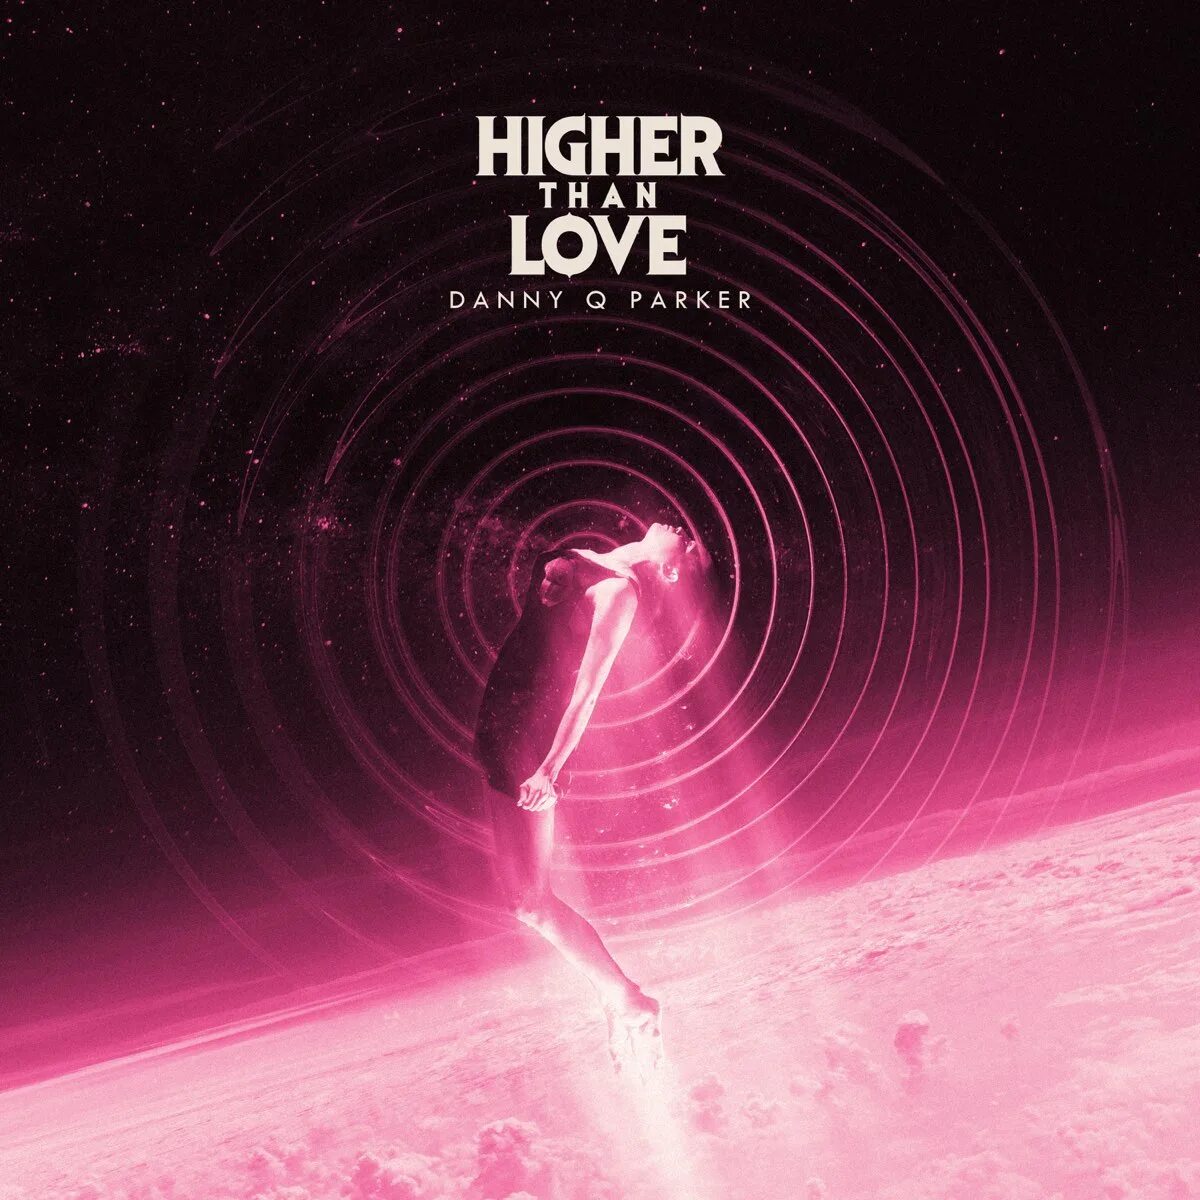 High and higher песня. Danny Love. High Love. Higher песня. Than Love.